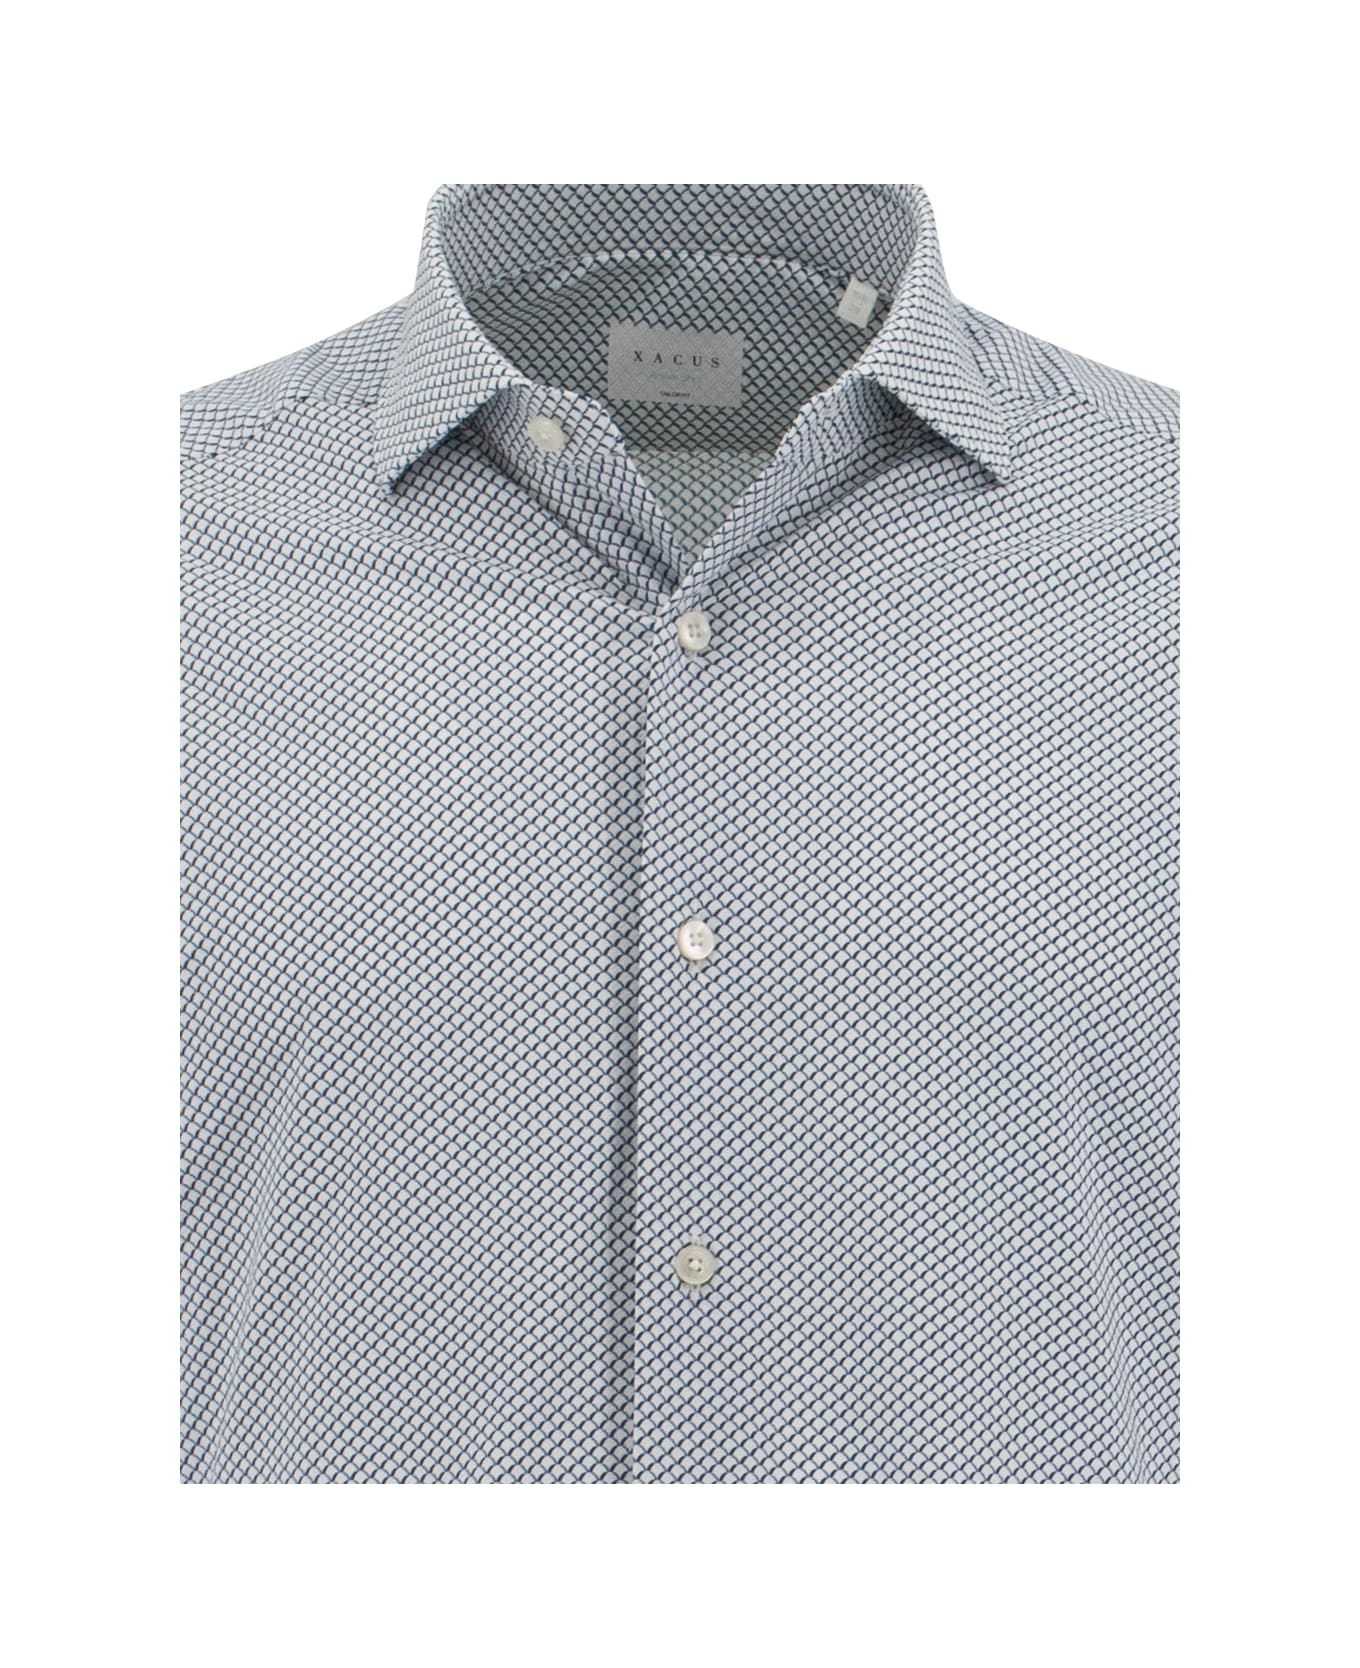 Xacus Shirt - WHITE AND BLUE FANTASY シャツ